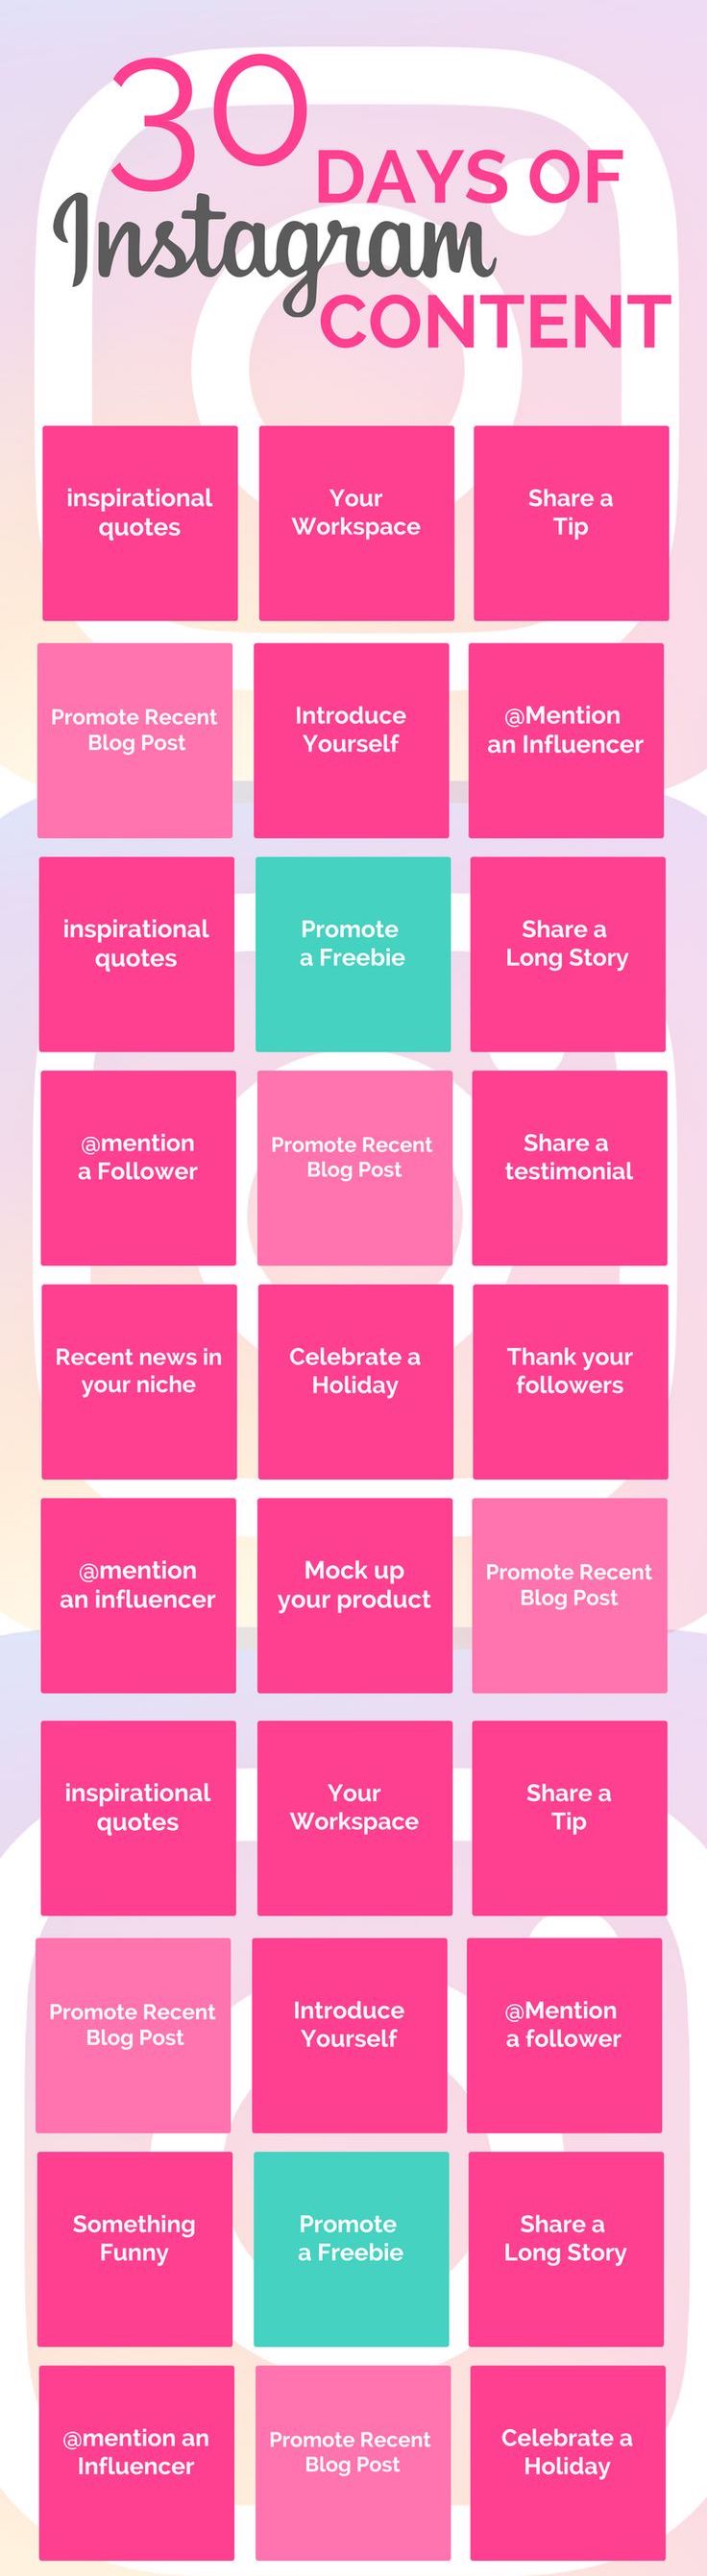 30 Days of Instagram Content